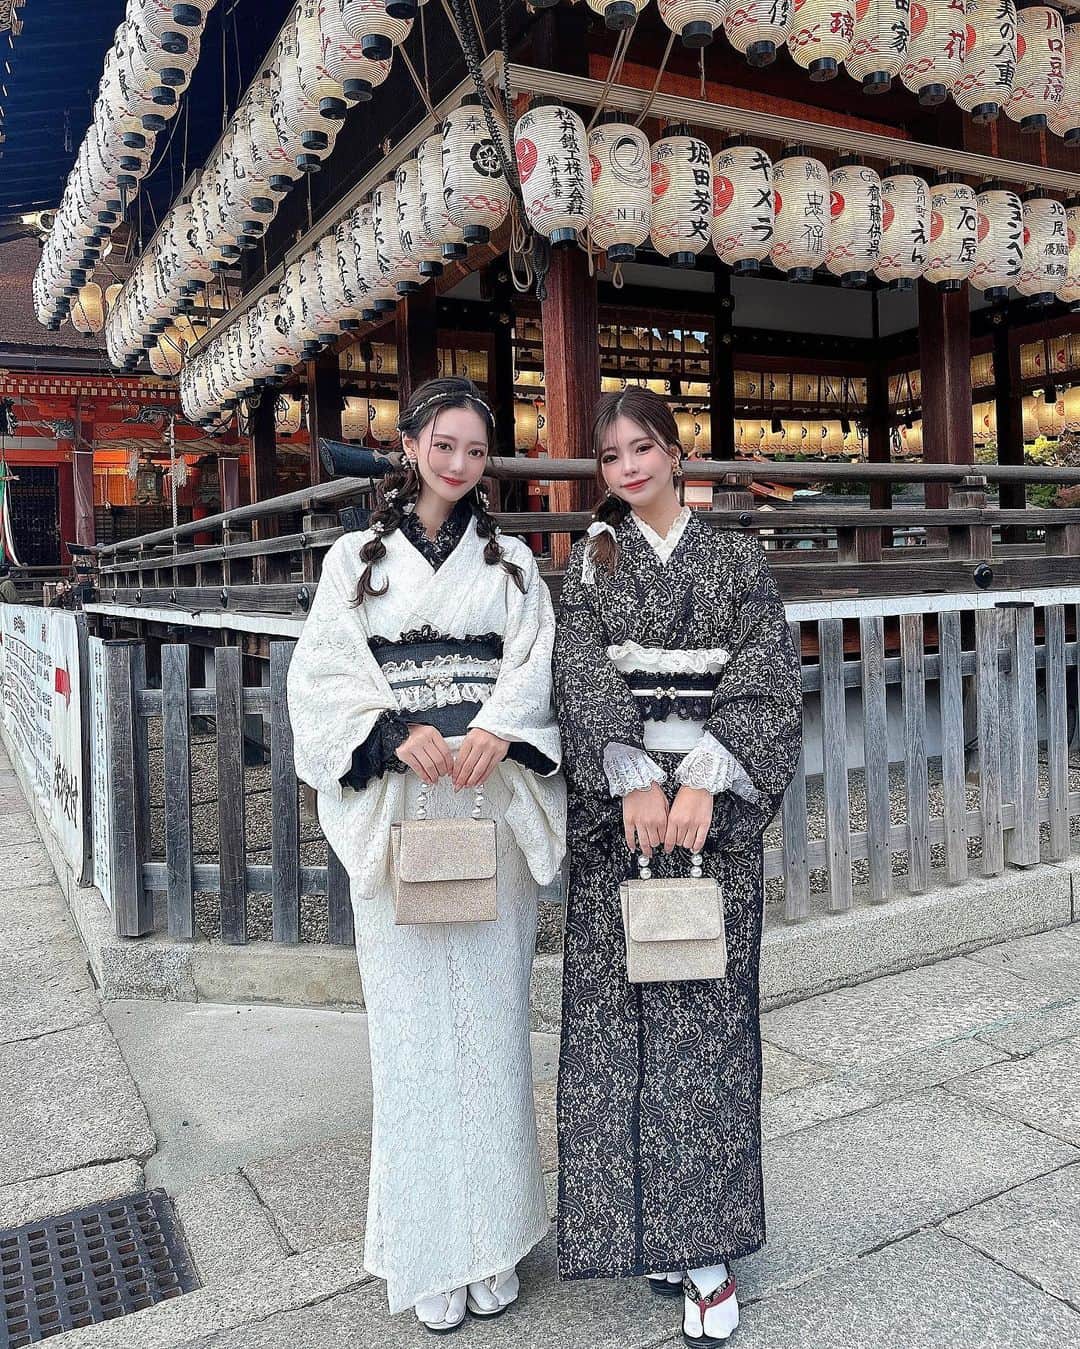 yuukachiのインスタグラム：「京都 着物旅👘🍵✨️ #京都旅 #着物デート  今日行ったのでさっそく投稿😚✌🏻✌🏻笑 もう着物も寒かったからお蕎麦食べて (  #祇園京めん )芸能人や有名人のサイン沢山あった！ 美味しかった✨️  その後に八坂神社徘徊して、河原町でお団子食べて サクッと着物旅は終了したけど丁度いい時間やった😚笑  京都は暖かい季節に行きたいねぇ☺️🍁🍂  着物は @kyokomachi_wafuku さんでレンタルしました👘 最近人気のレース着物を色違いでお揃いしたよ✌🏻 毎年1回は着物着たくなる~☺️✨️  #今日着物旅#京都ぶらり旅#着物レンタル #みぃかち #着物ヘア#着物女子#京都観光#京都ランチ#京都旅行  #レース着物#そうだ京都行こう#京都紅葉#八坂神社」